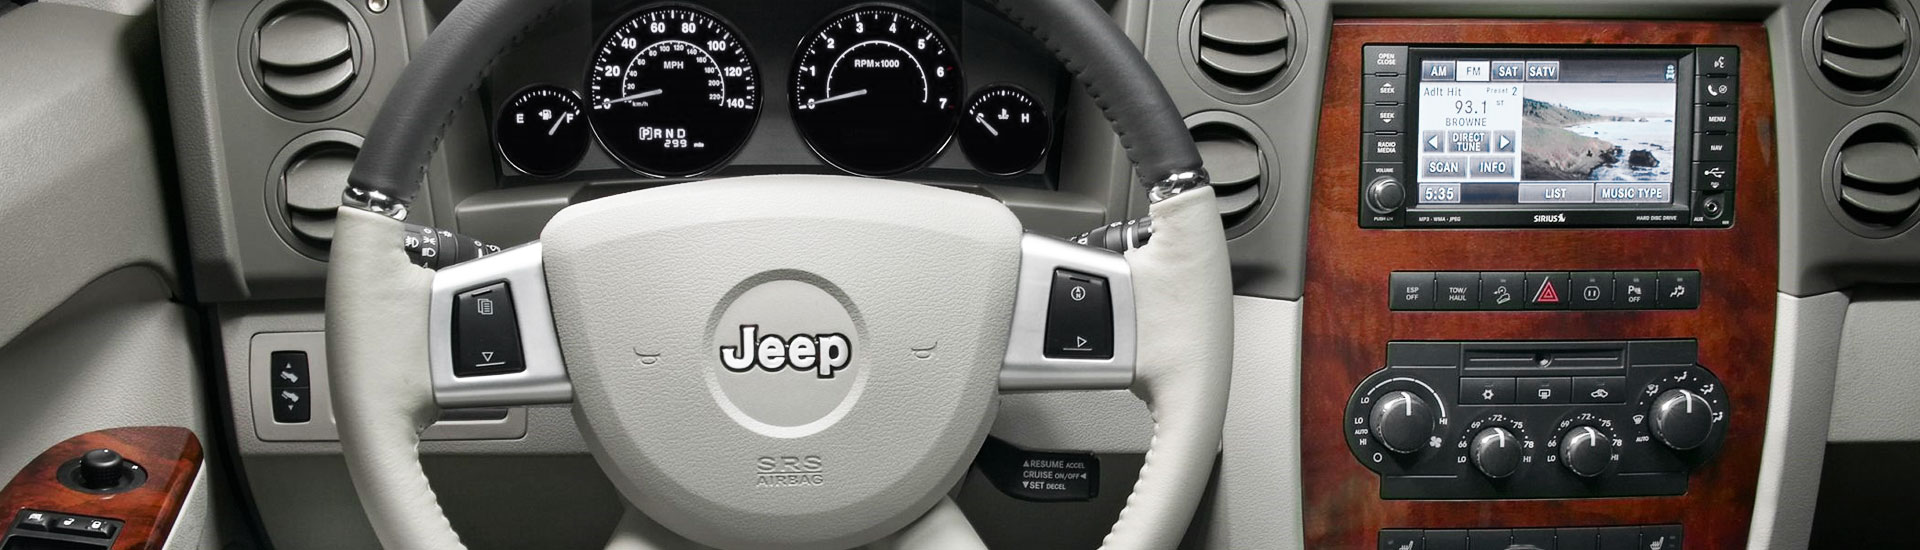 2009 Jeep Patriot Custom Dash Kits